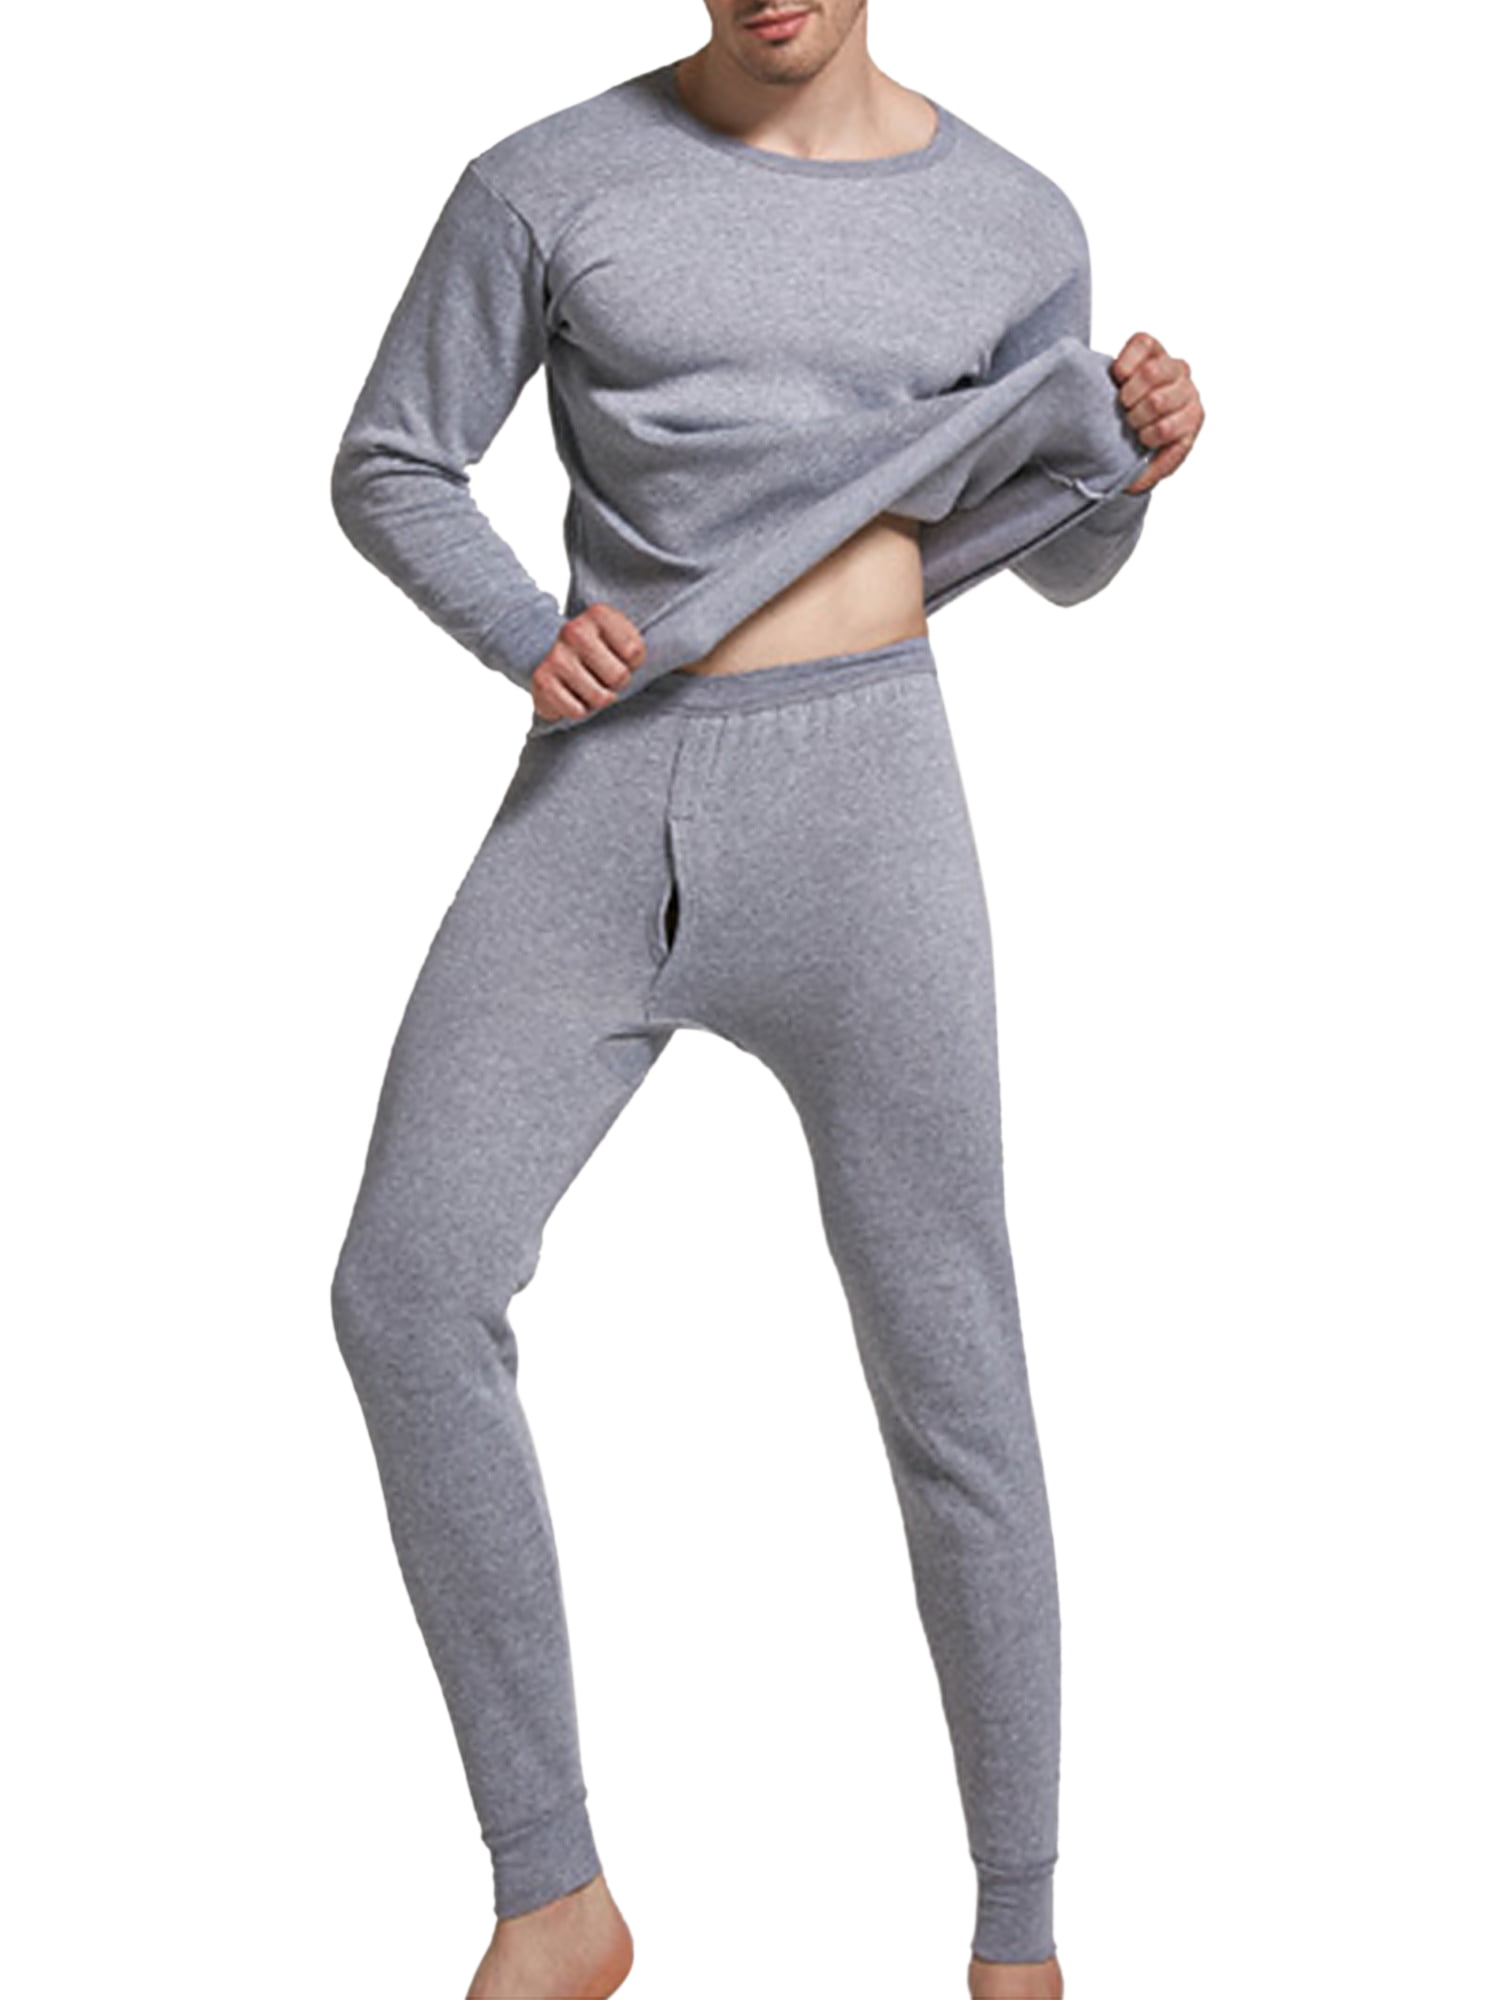 Fleece Lined Men's Long Johns Thermal Underwear Bottom Pants Home Pajamas